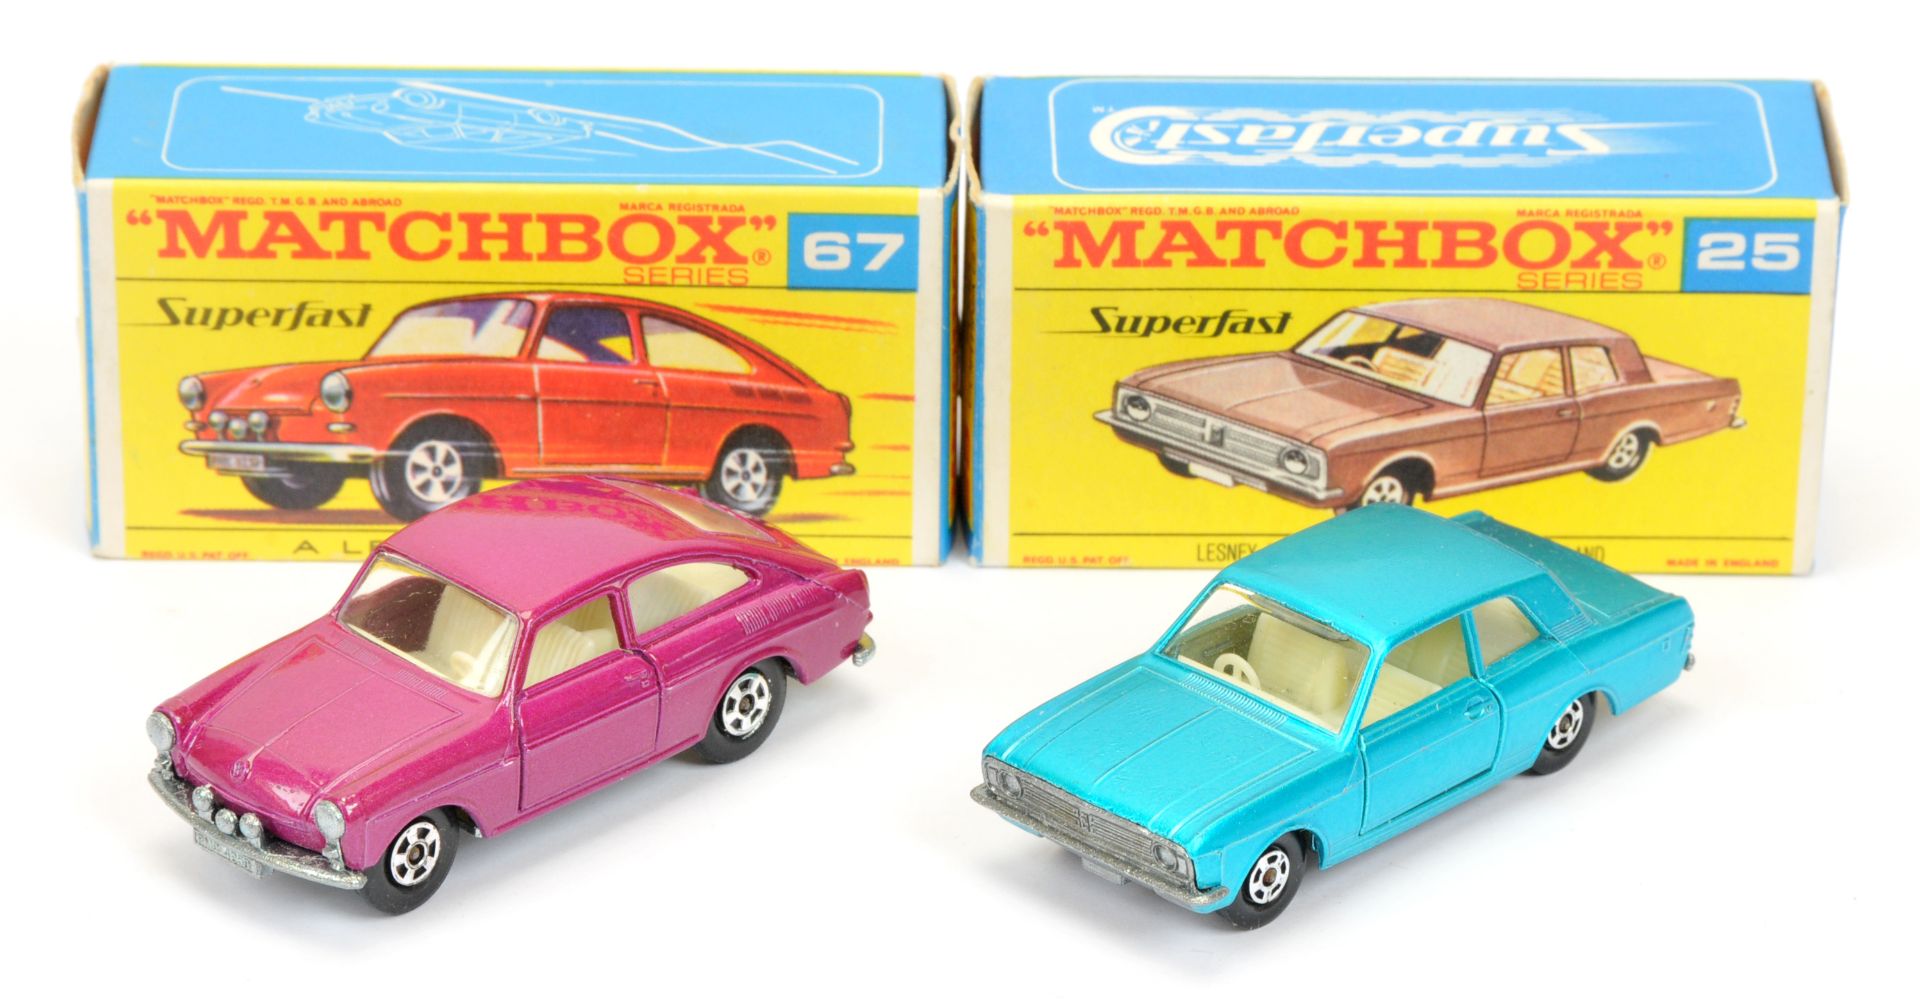 Matchbox Superfast pair (1) 25a Ford Cortina GT - metallic blue body, clear windows, ivory interi...